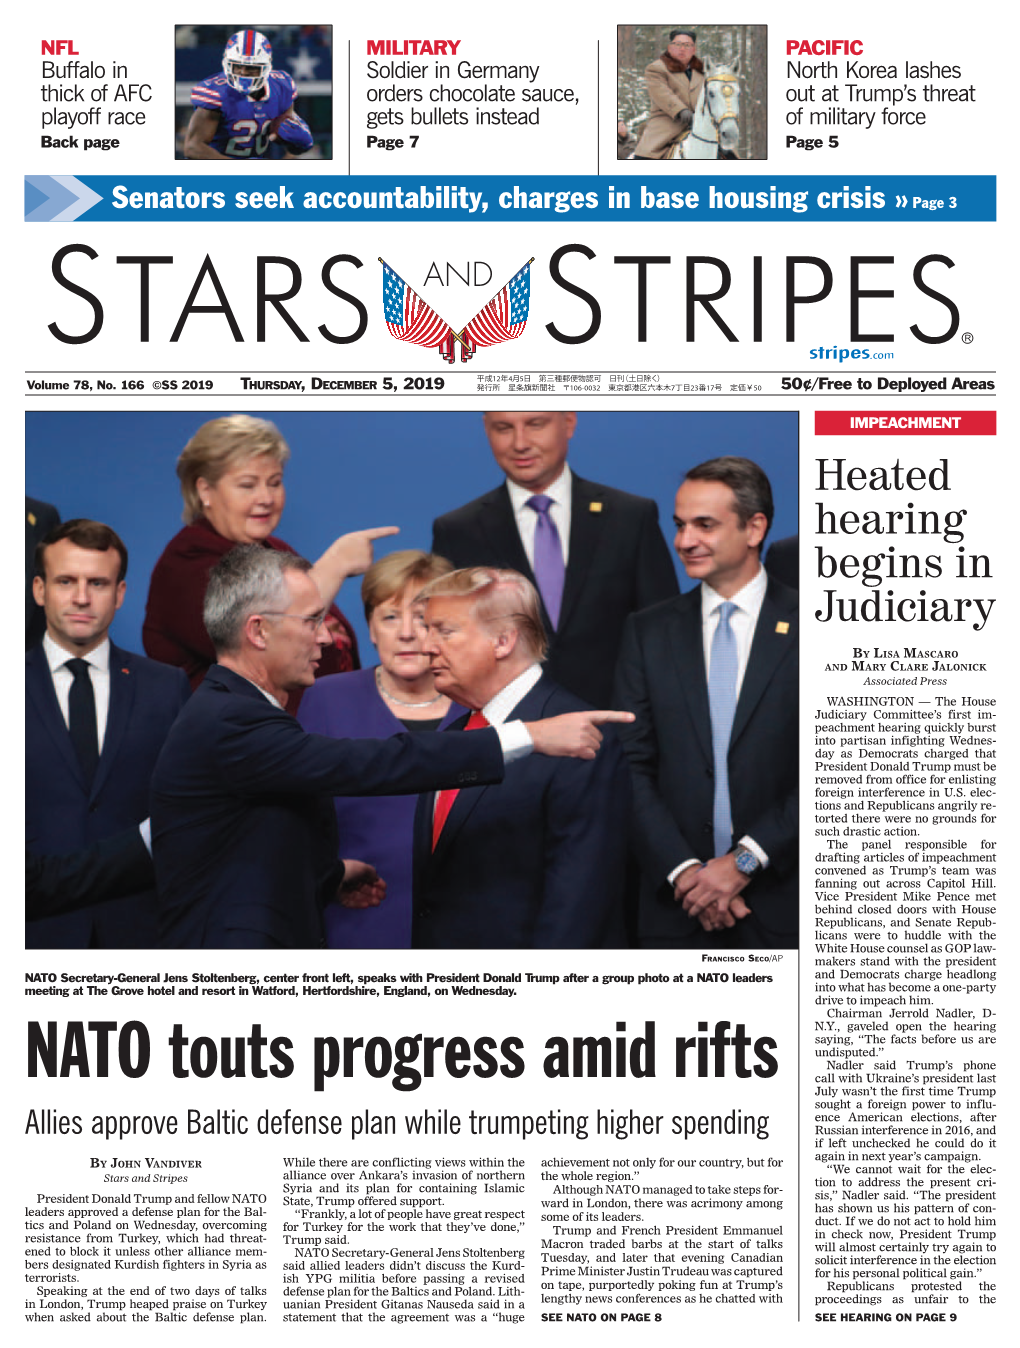 NATO Touts Progress Amid Rifts